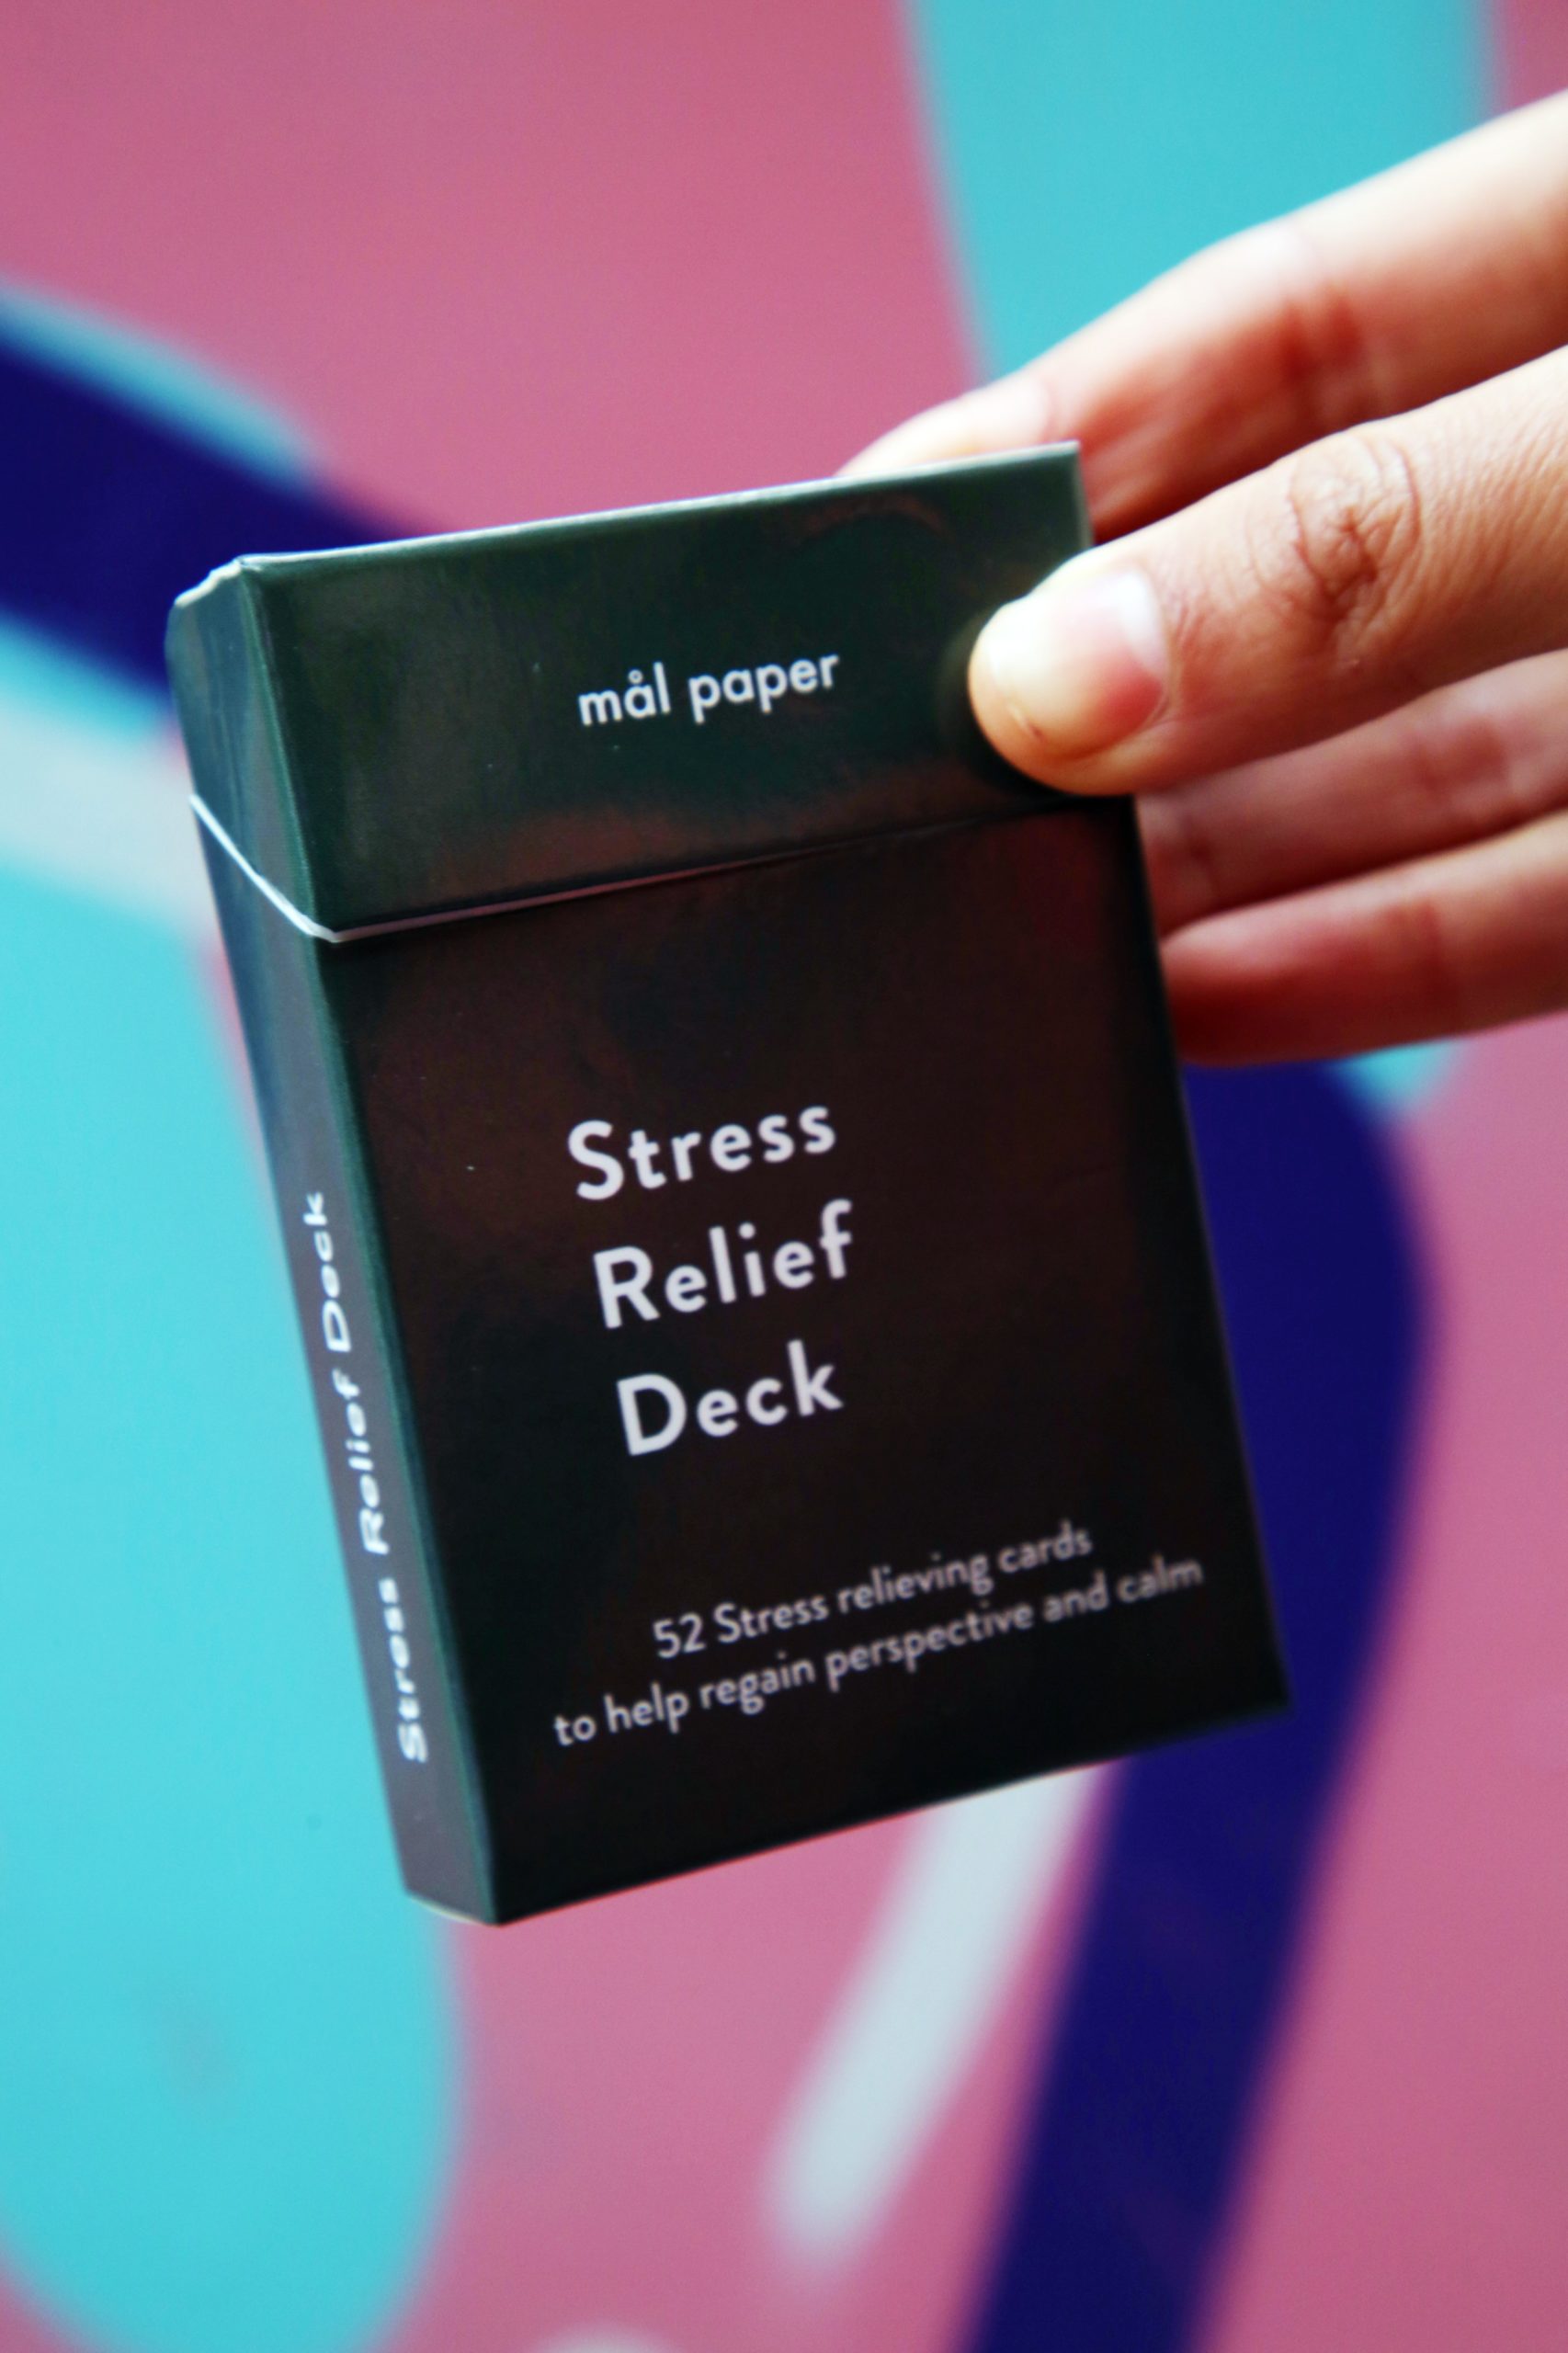 <img src="stress.jpg" alt="stress relief cards self-care christmas"/> 